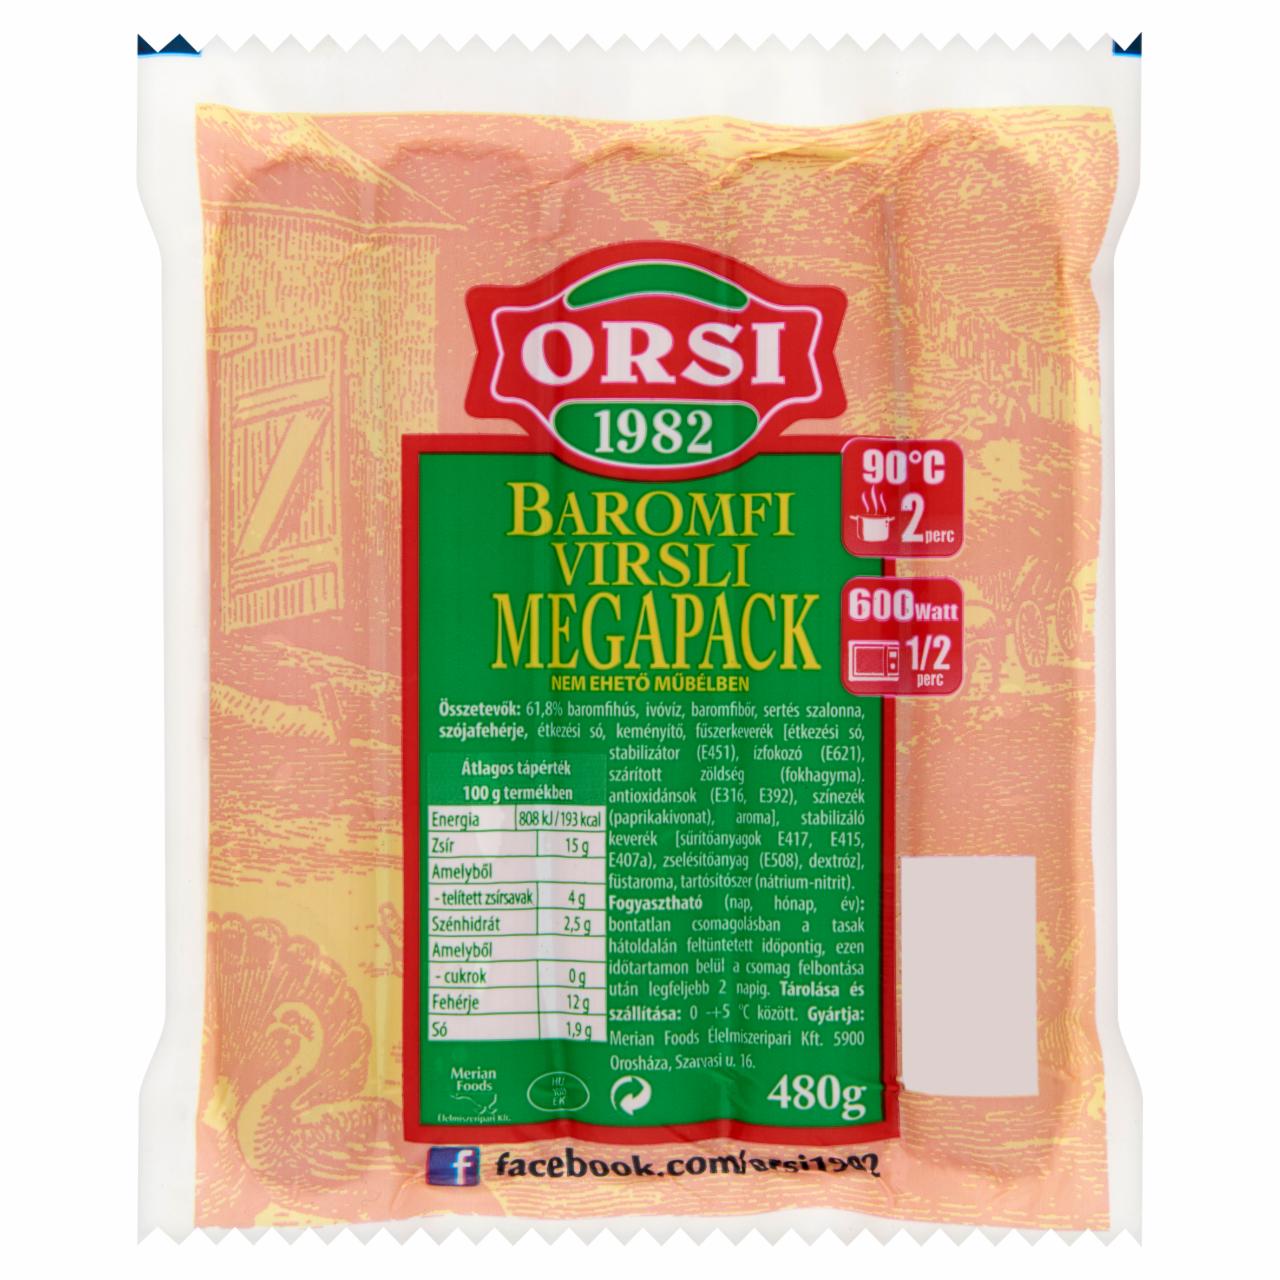 Képek - Orsi Megapack baromfi virsli 480 g